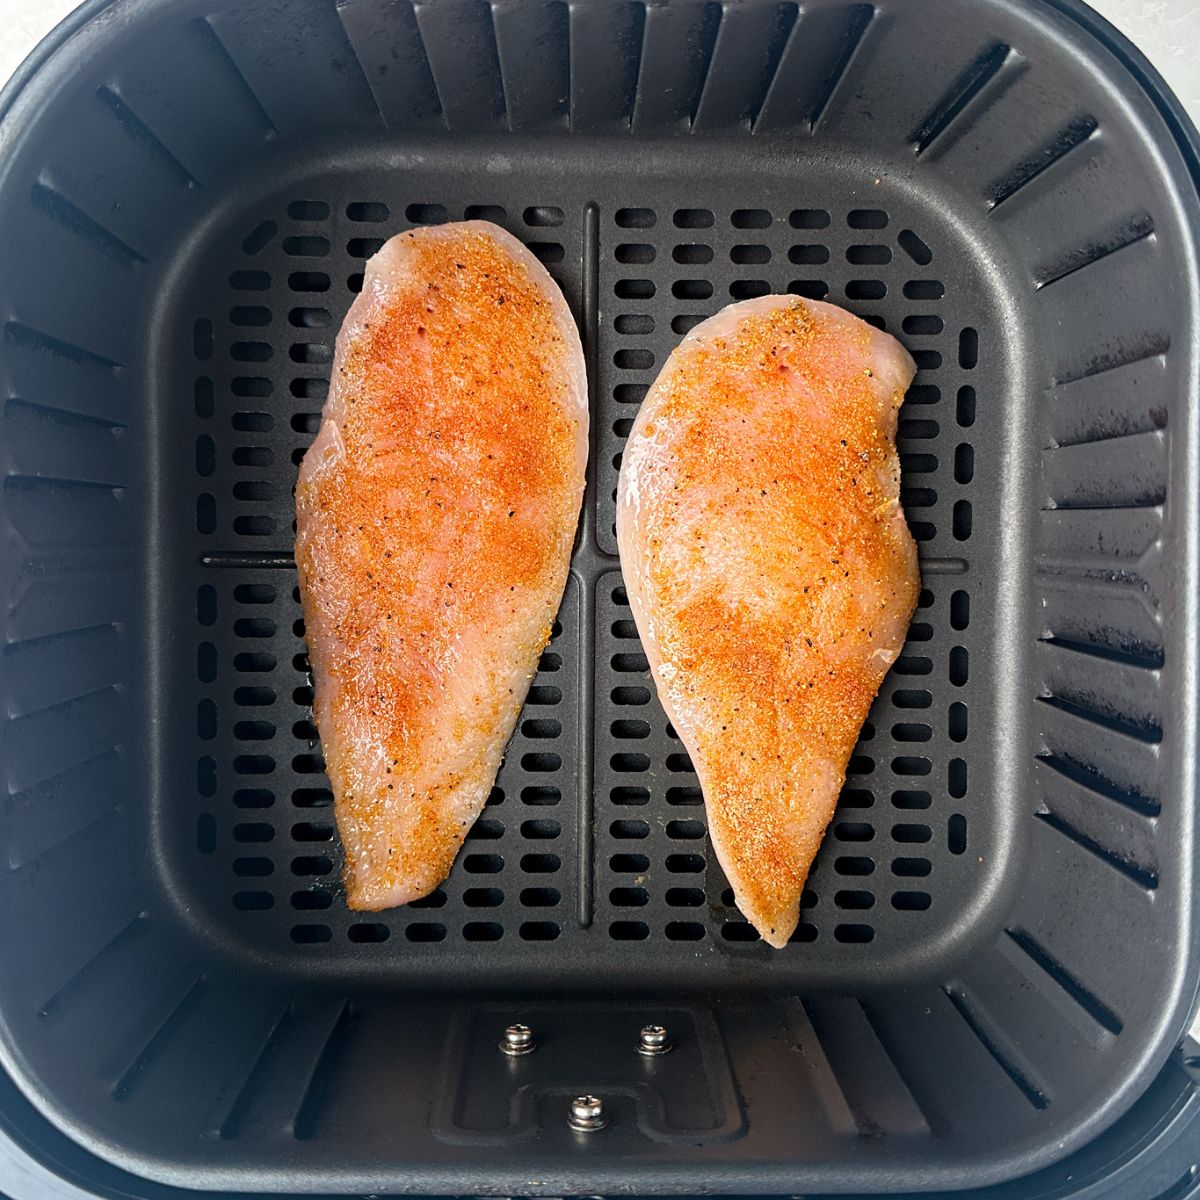 Air fryer basket with seasoning chicken breasts.